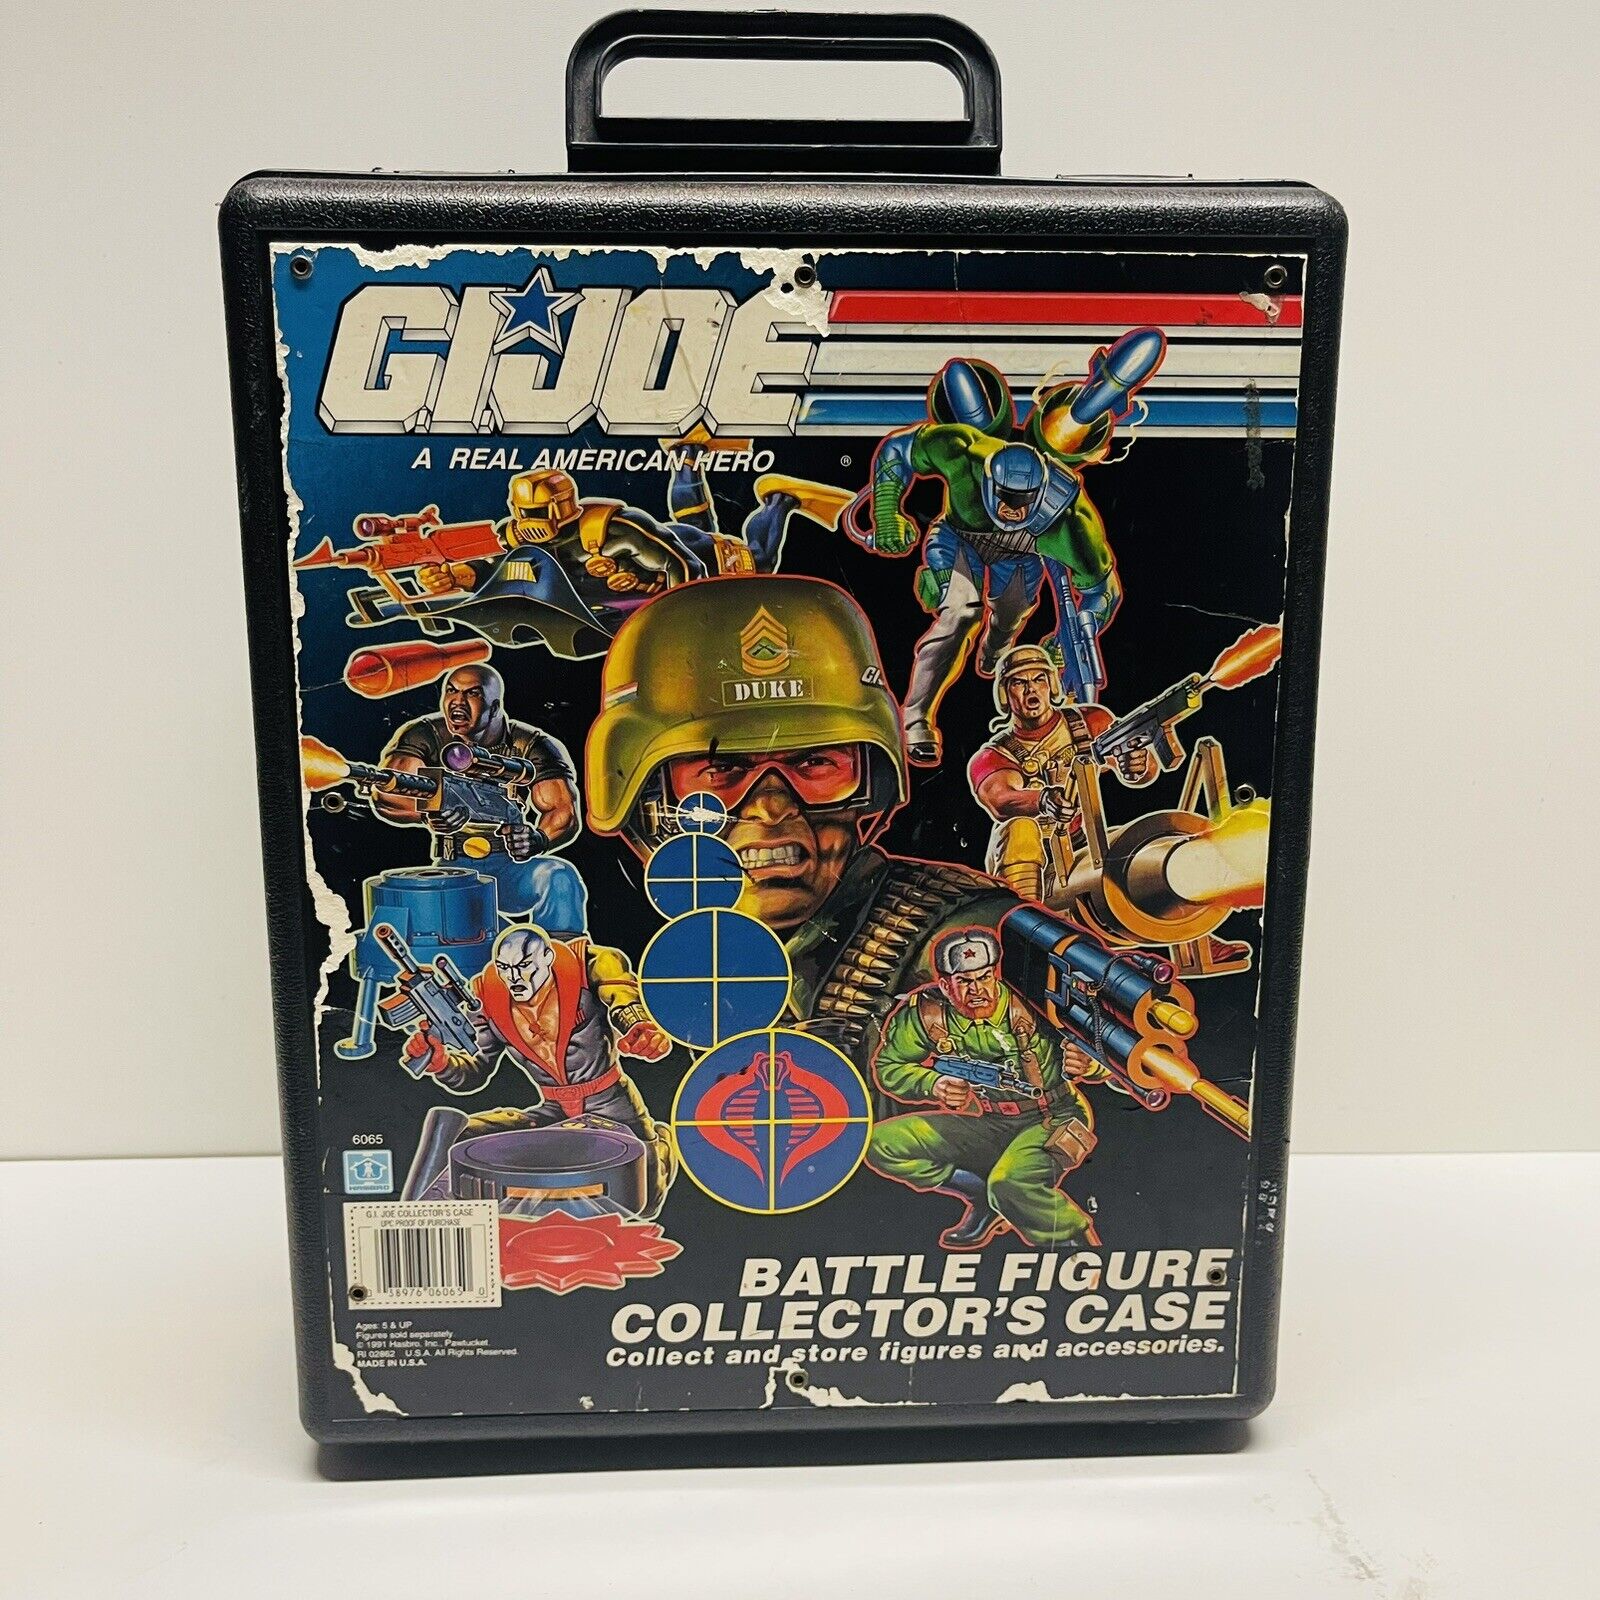 Vintage GI Joe 1991 Hasbro 13 x 11 x 6" Battle Figure Collector's Case Storage